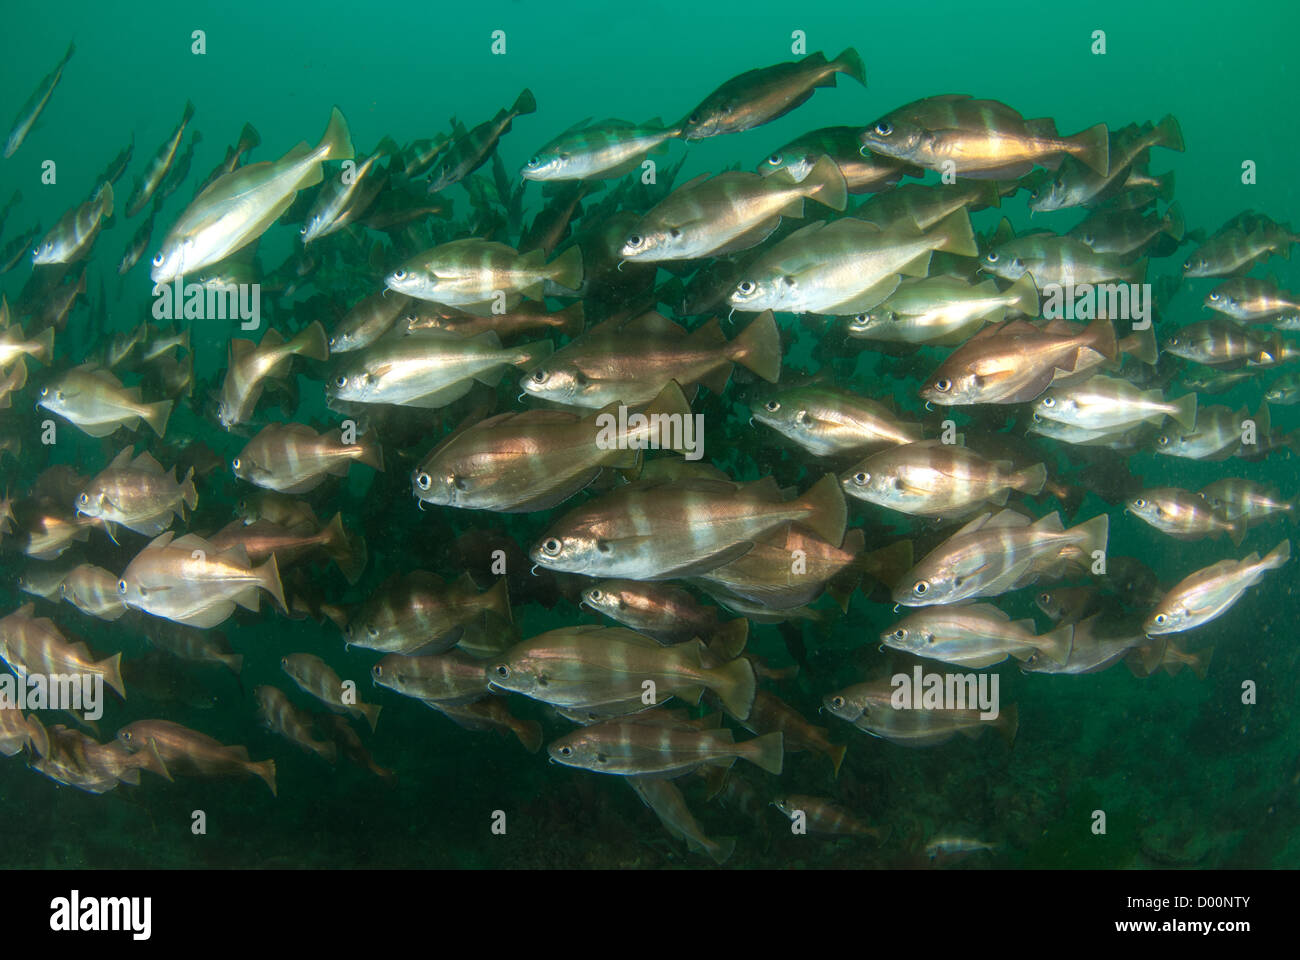 Schooling fish, Stock Photo